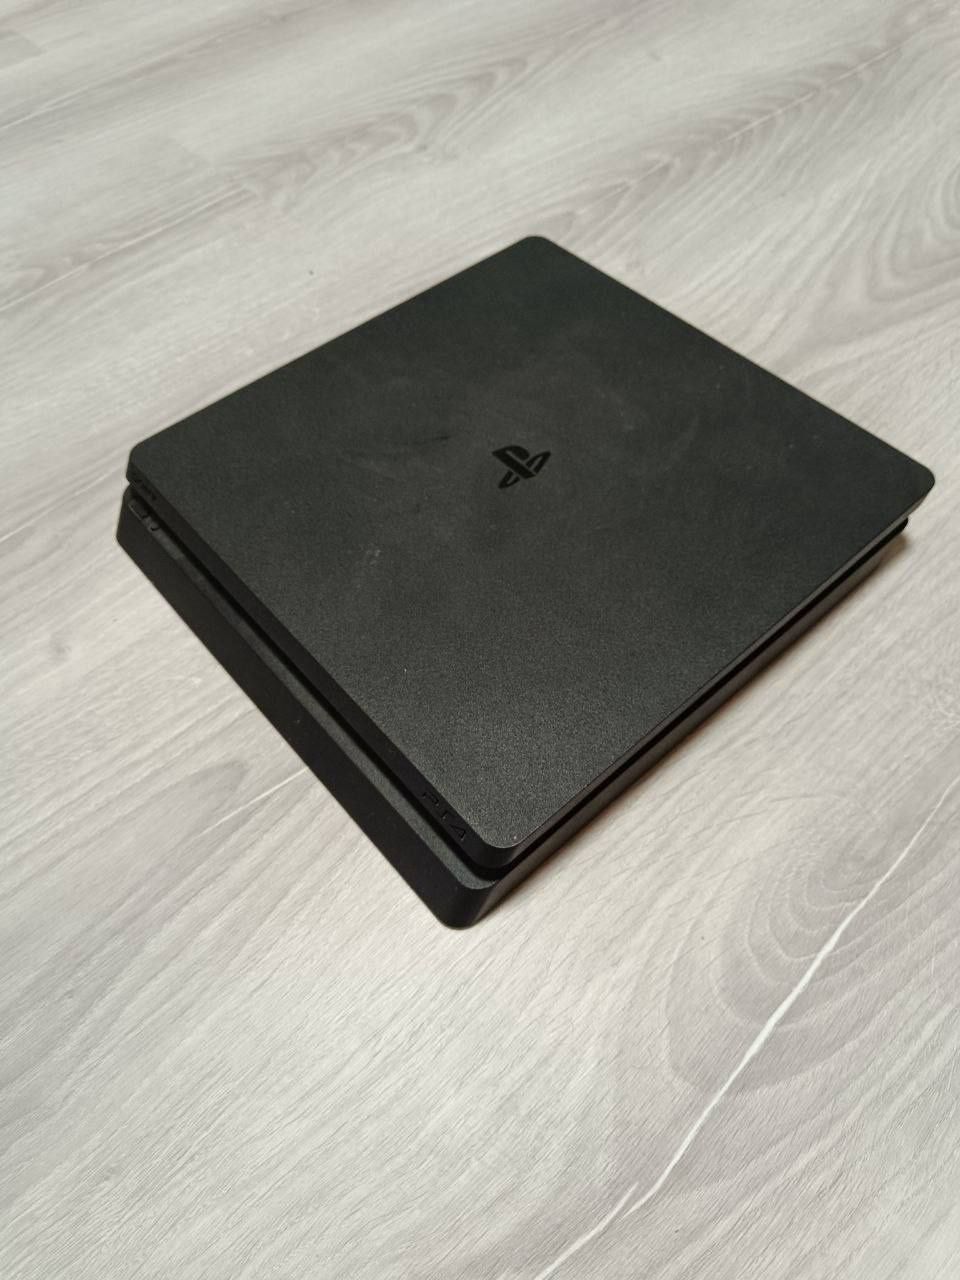 Sony Playstation 4 Slim 500Gb (PS4 Slim) та 2 DualShock 4 Black